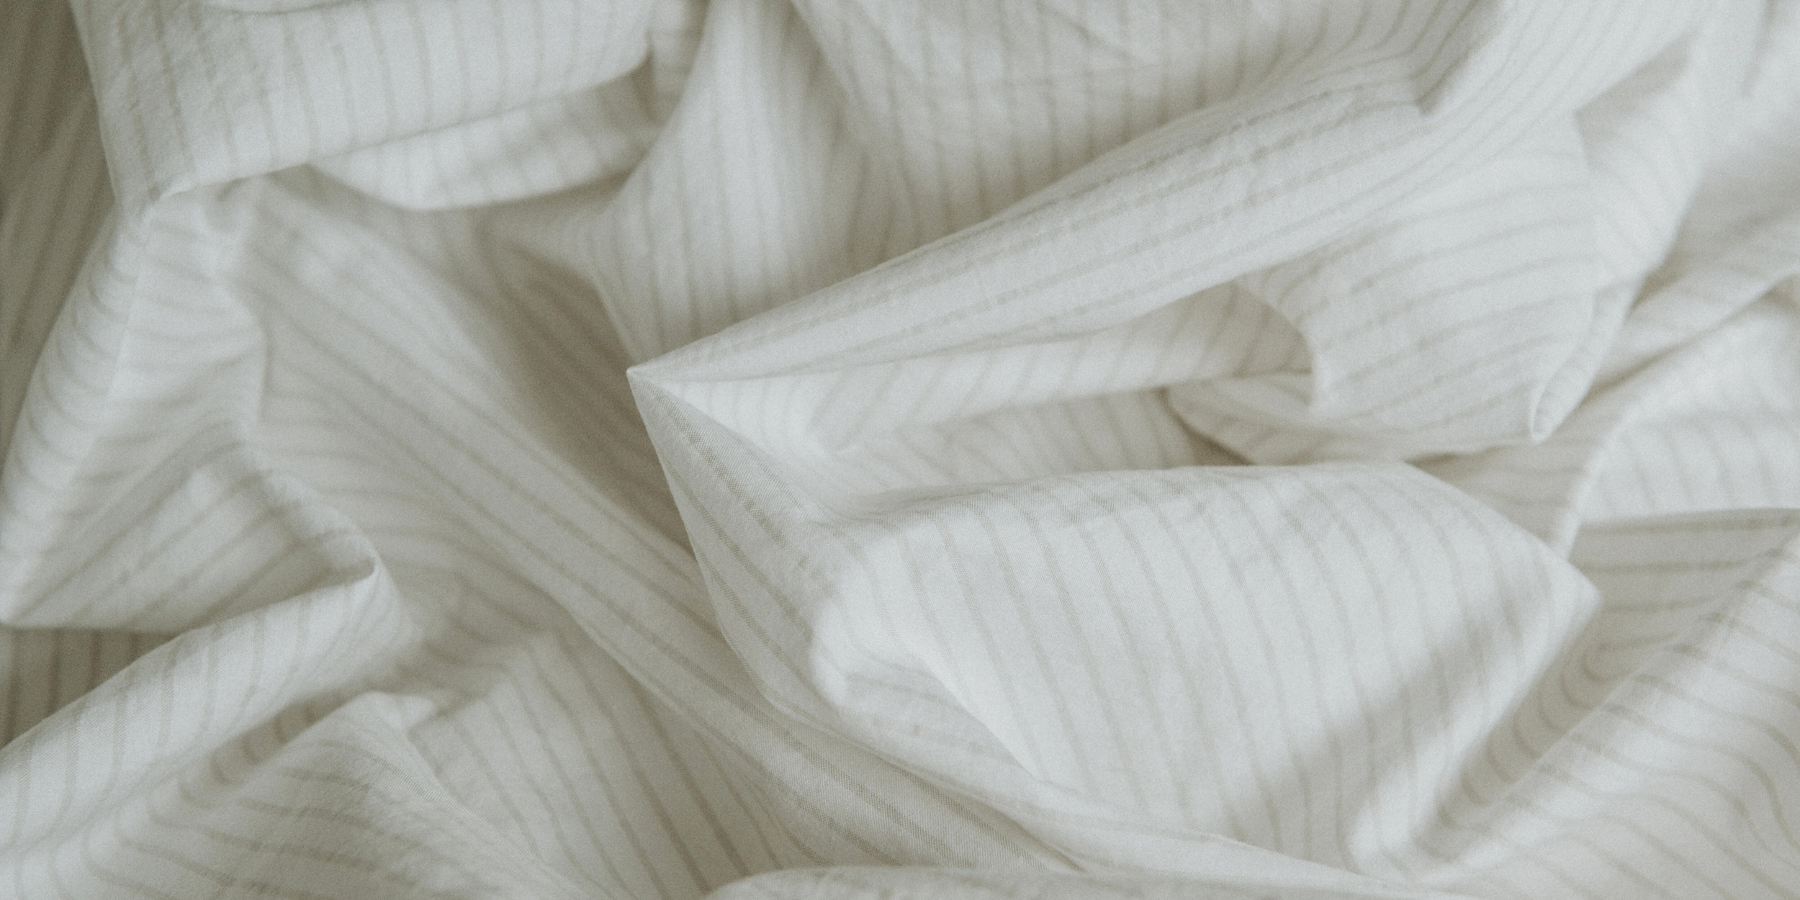 Close up of Tuck's crisp, pinstriped cooling bedsheet.